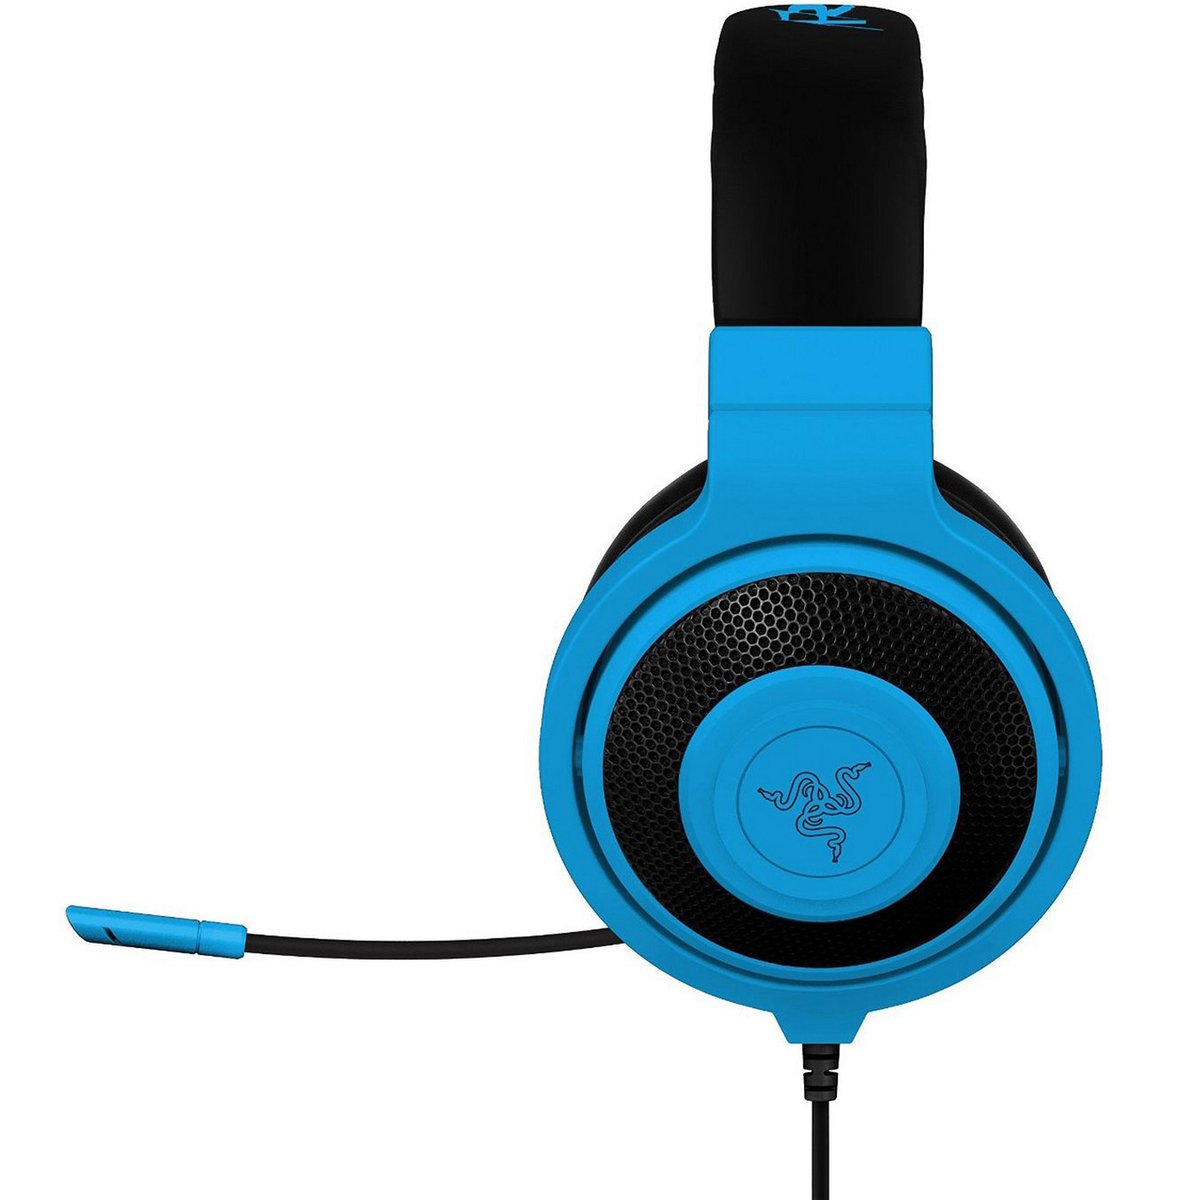 Razer Gaming Headset Pro Neon Blue